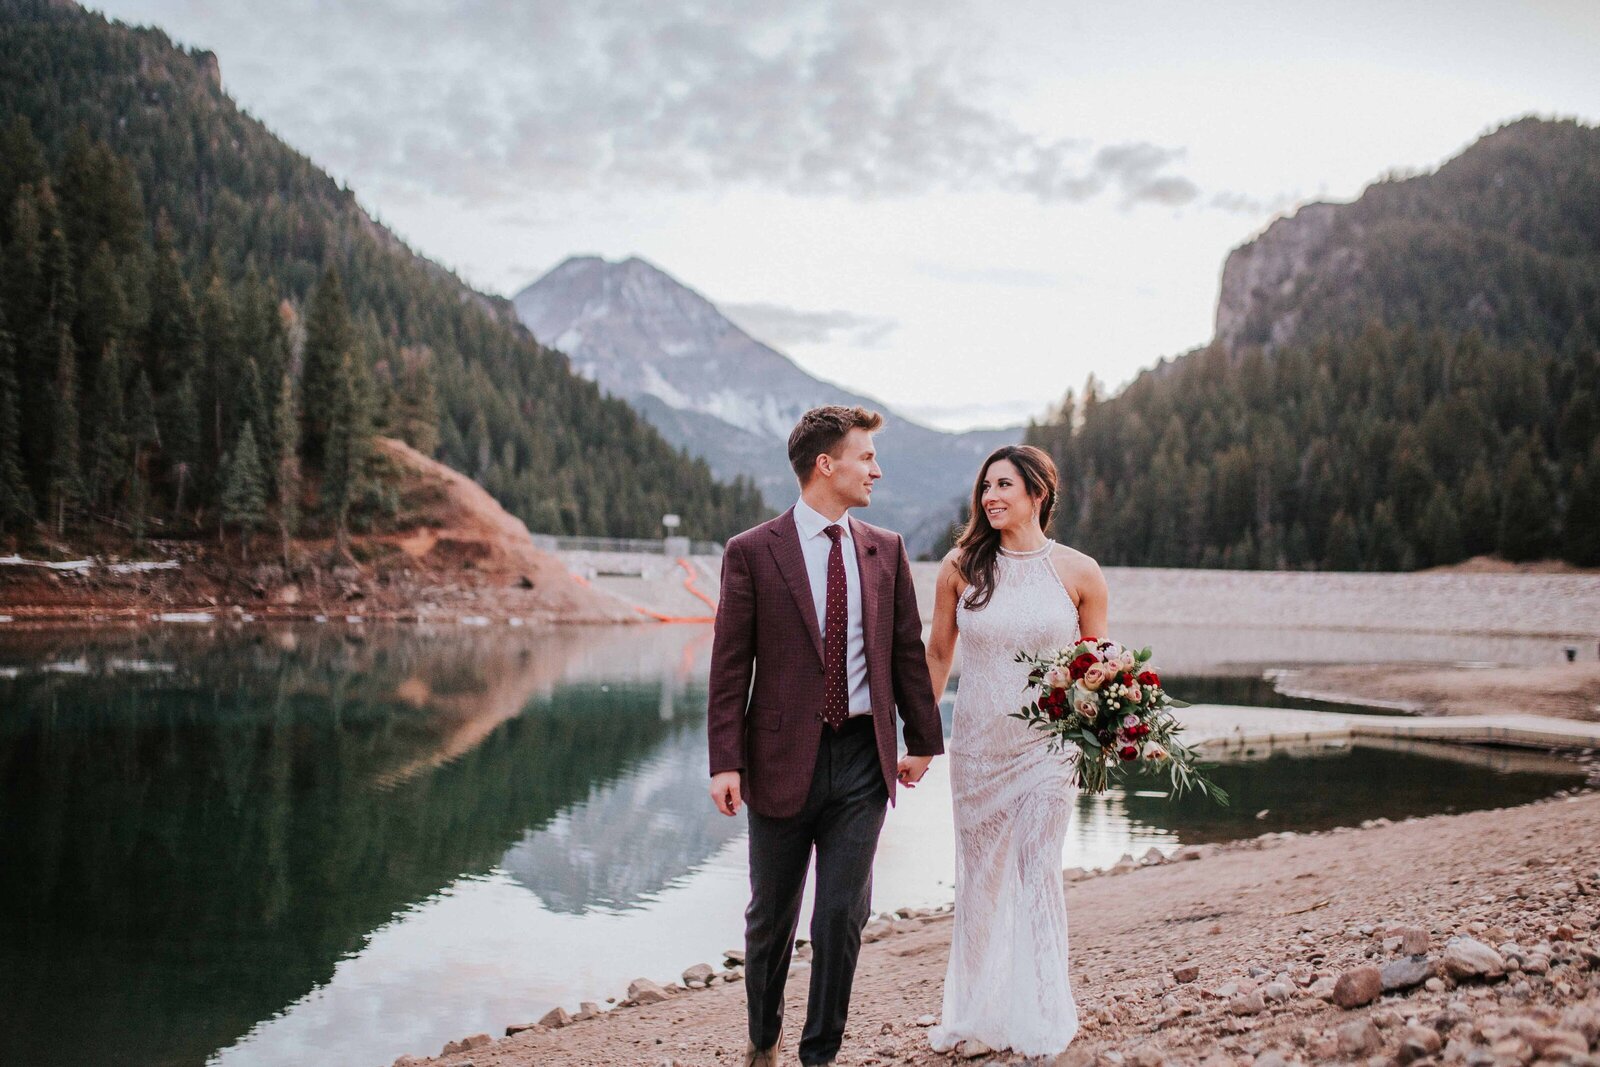 Lake Tahoe wedding photographer captures bride and groom walking on Lake Tahoe beach